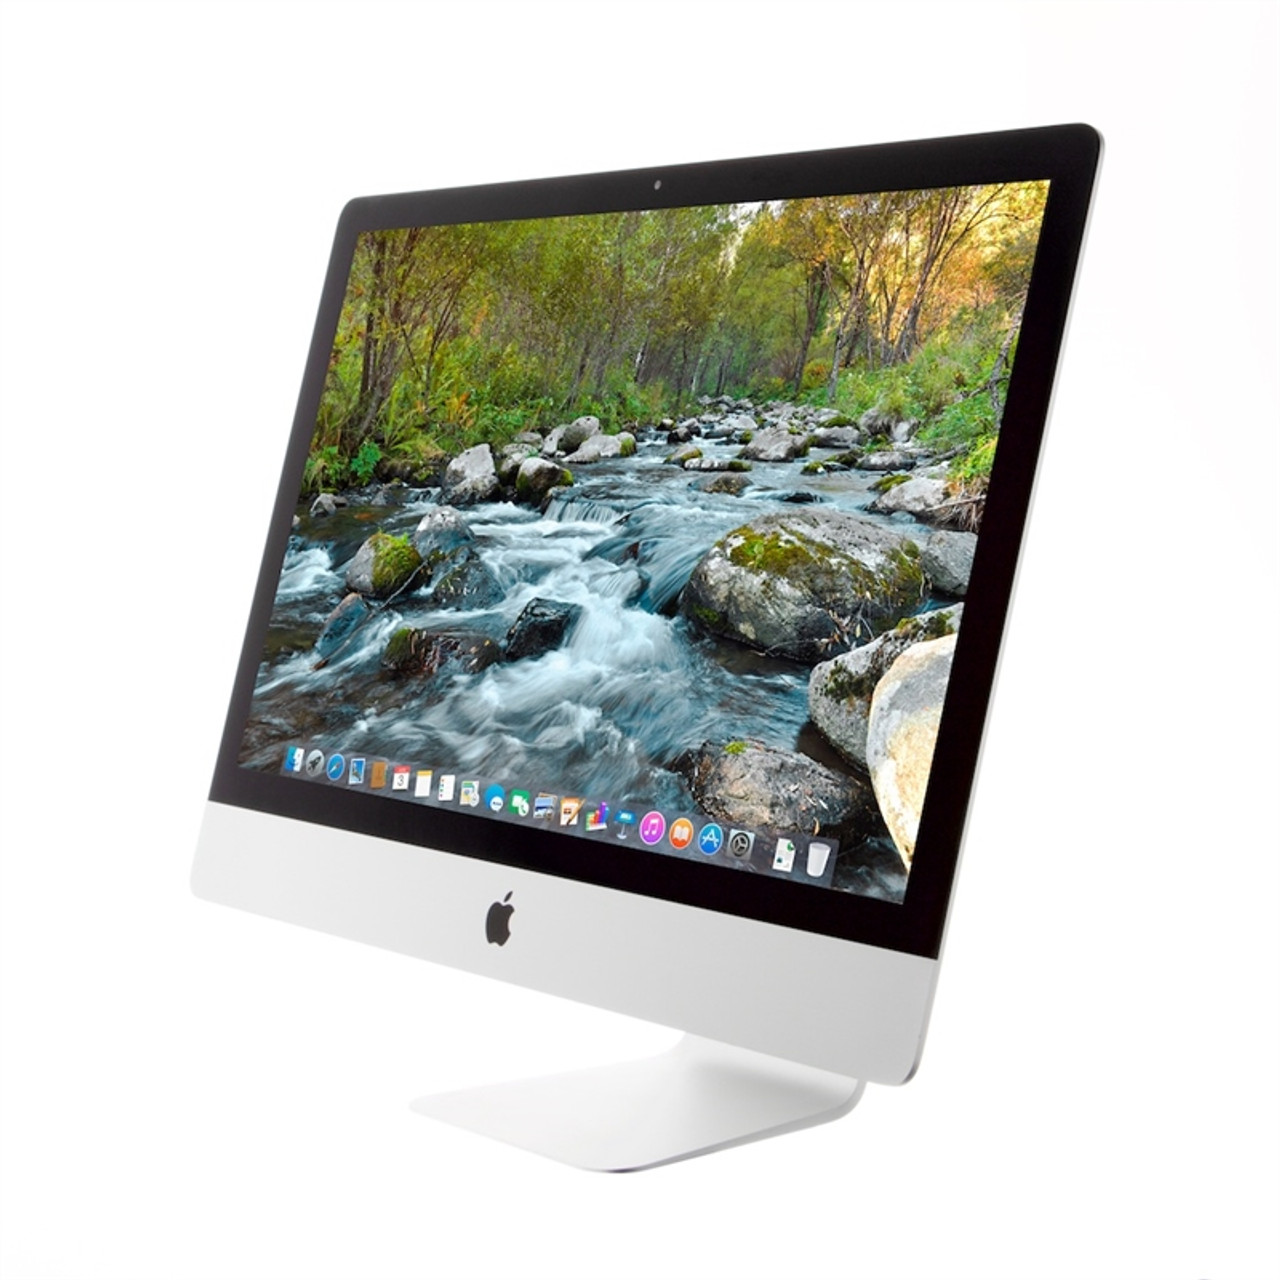 Apple iMac Retina 5K 27-inch 3.3GHz Quad-core i5 (Late 2015) MK482LL/A 05 -  Excellent Condition